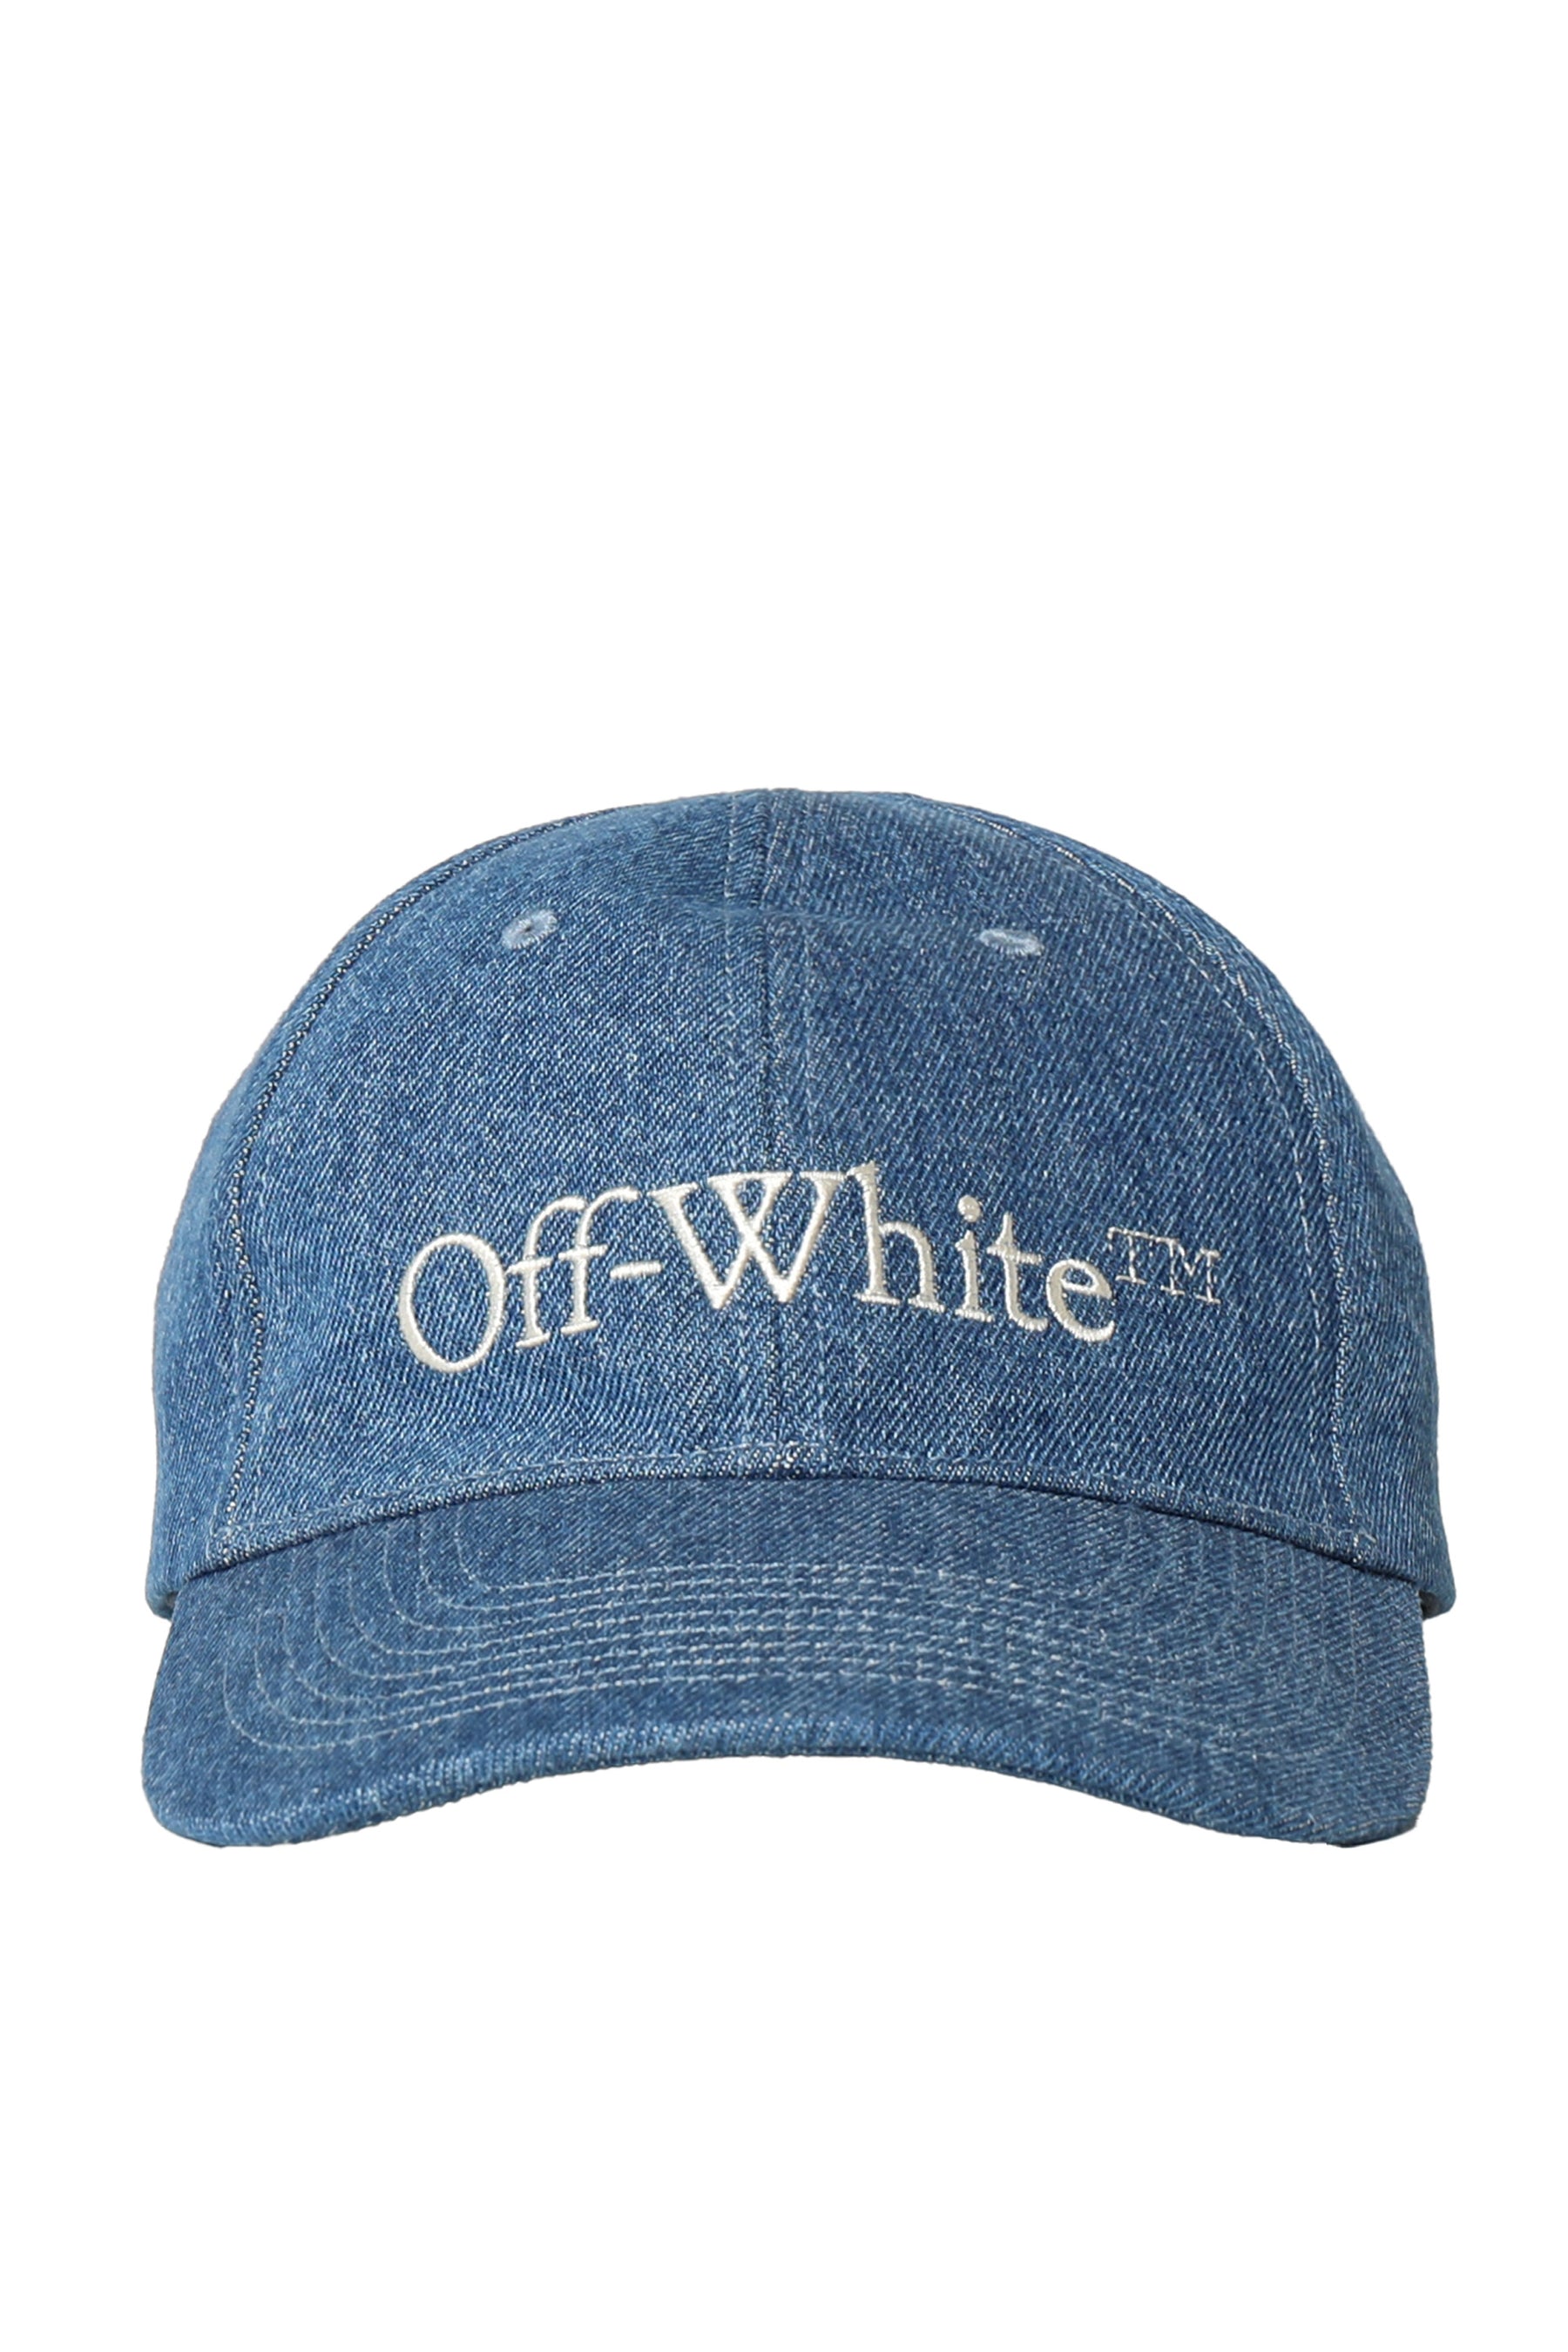 Off-White SS23 ARROW OVER BUCKET HAT / BLK WHT - NUBIAN